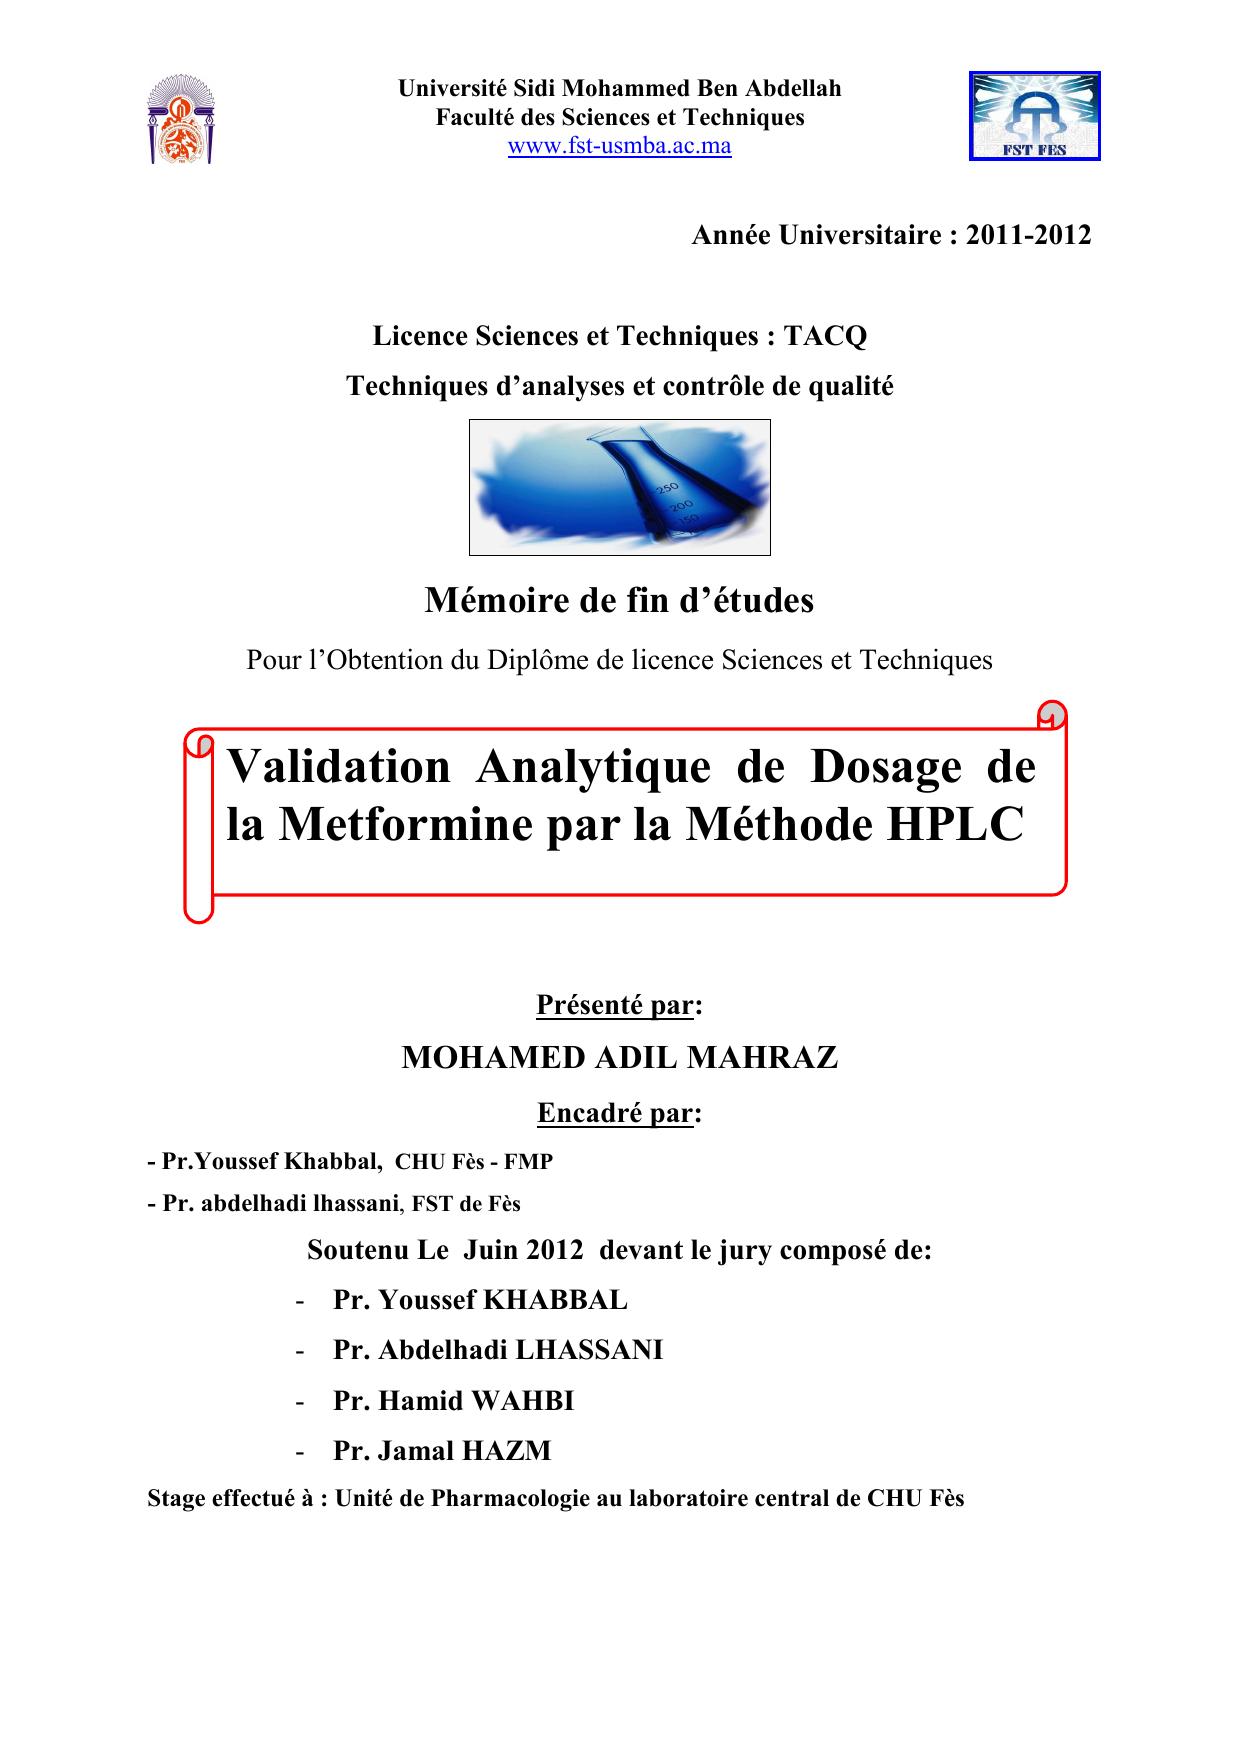 Validation Analytique de Dosage de la Metformine par la Méthode HPLC